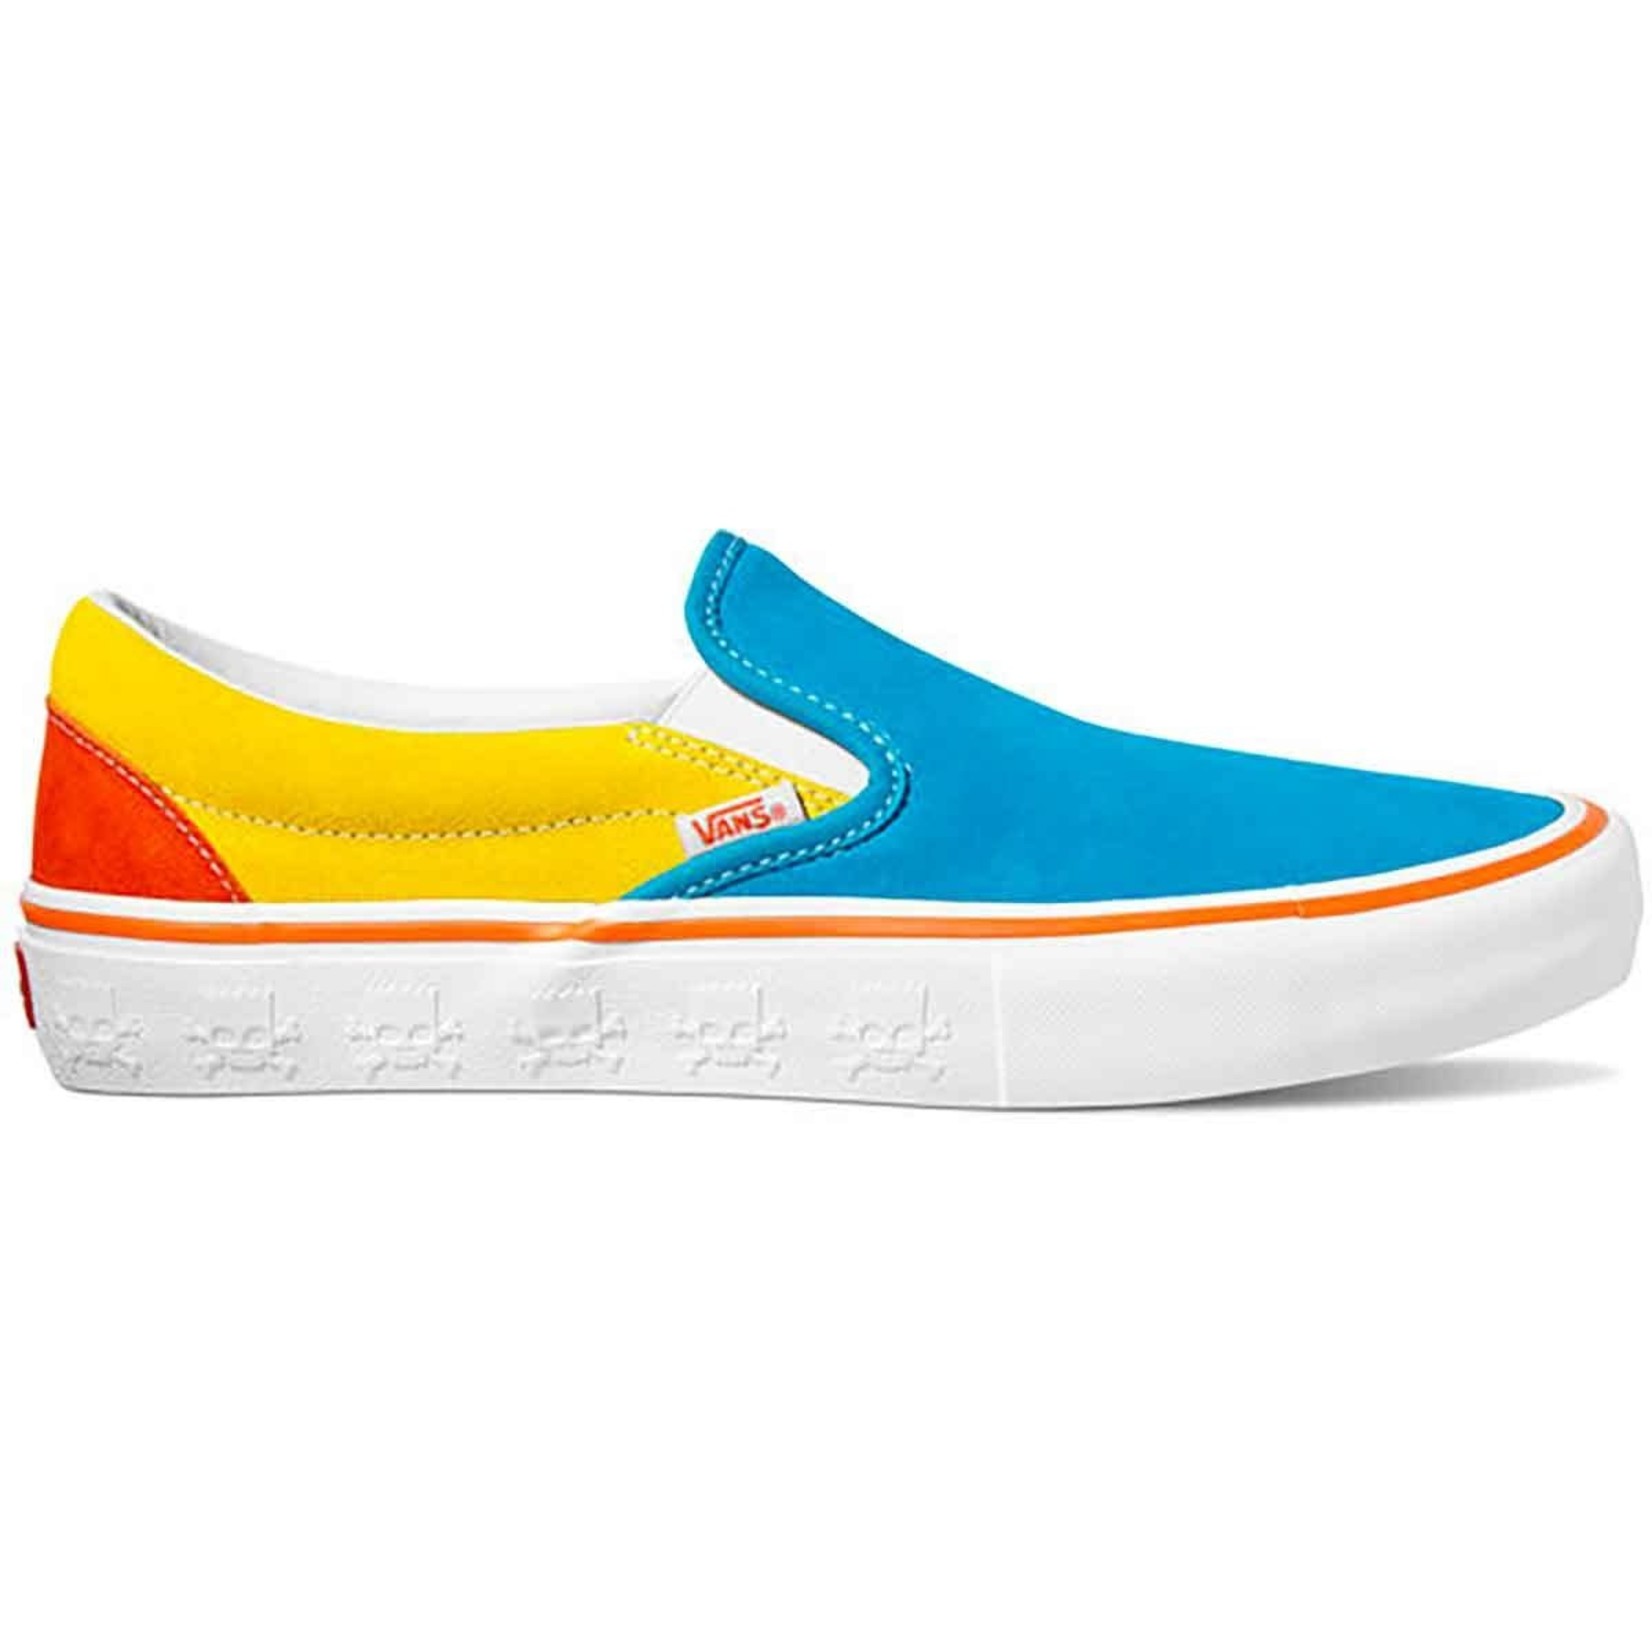 Vans Slip On Pro Skate Shoes - The Simpsons - - Attic Skate & Snow Shop